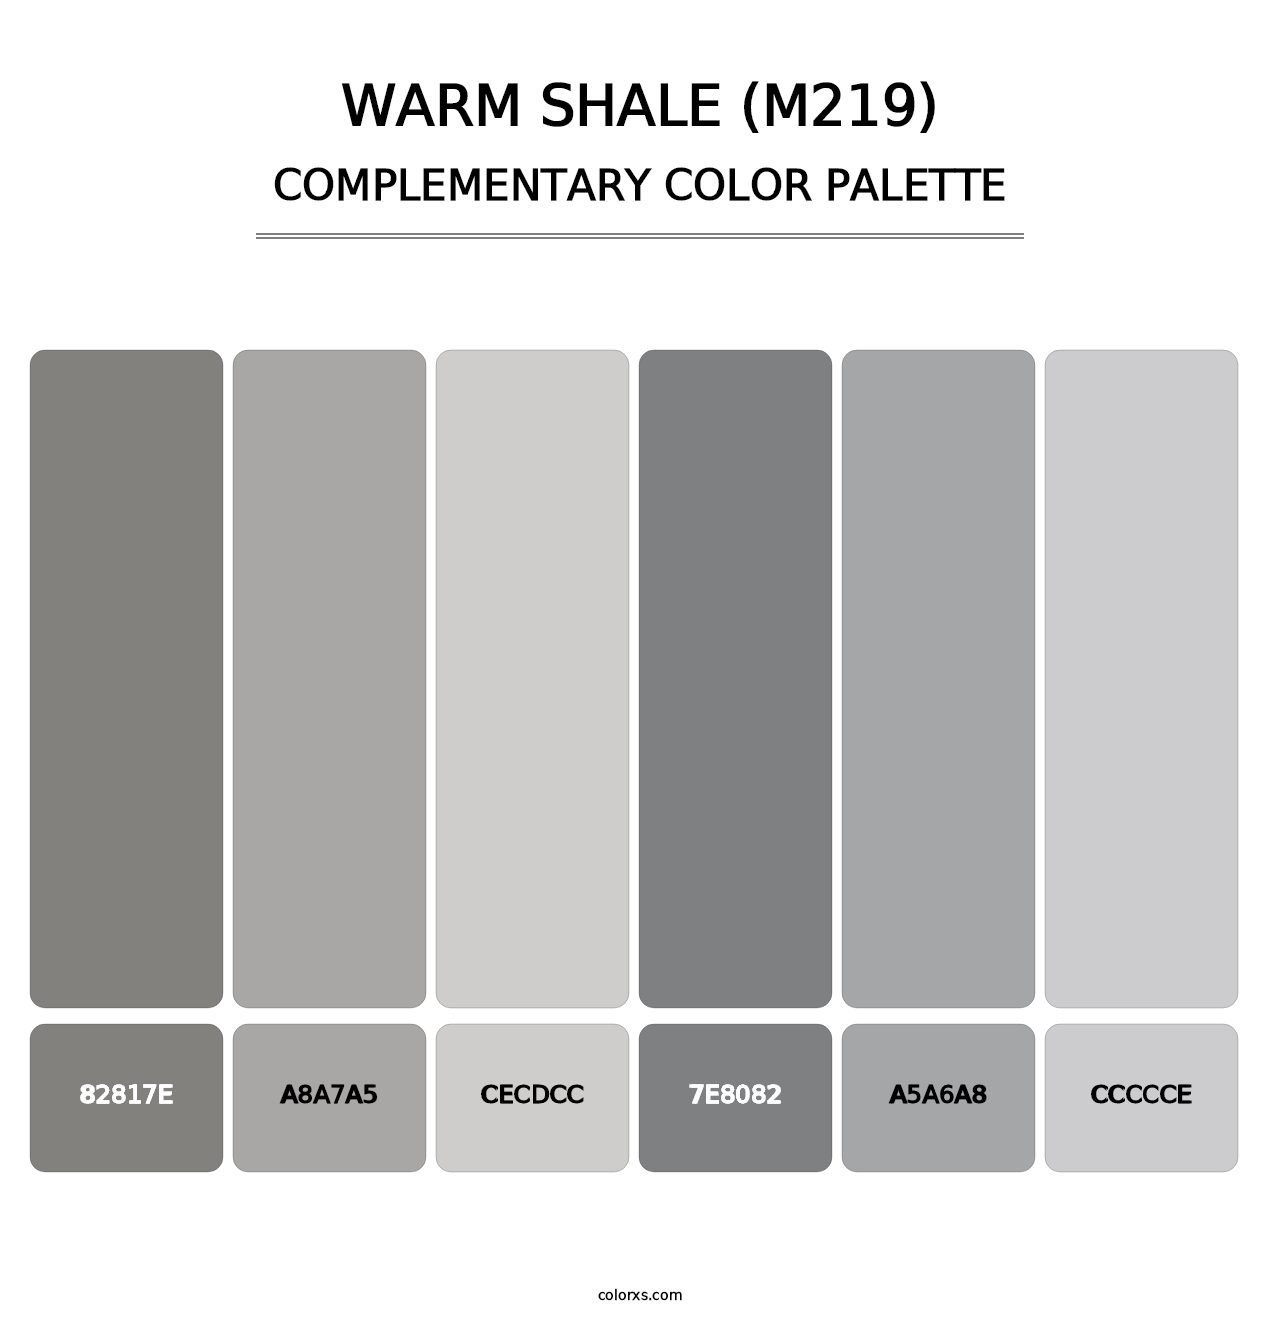 Warm Shale (M219) - Complementary Color Palette